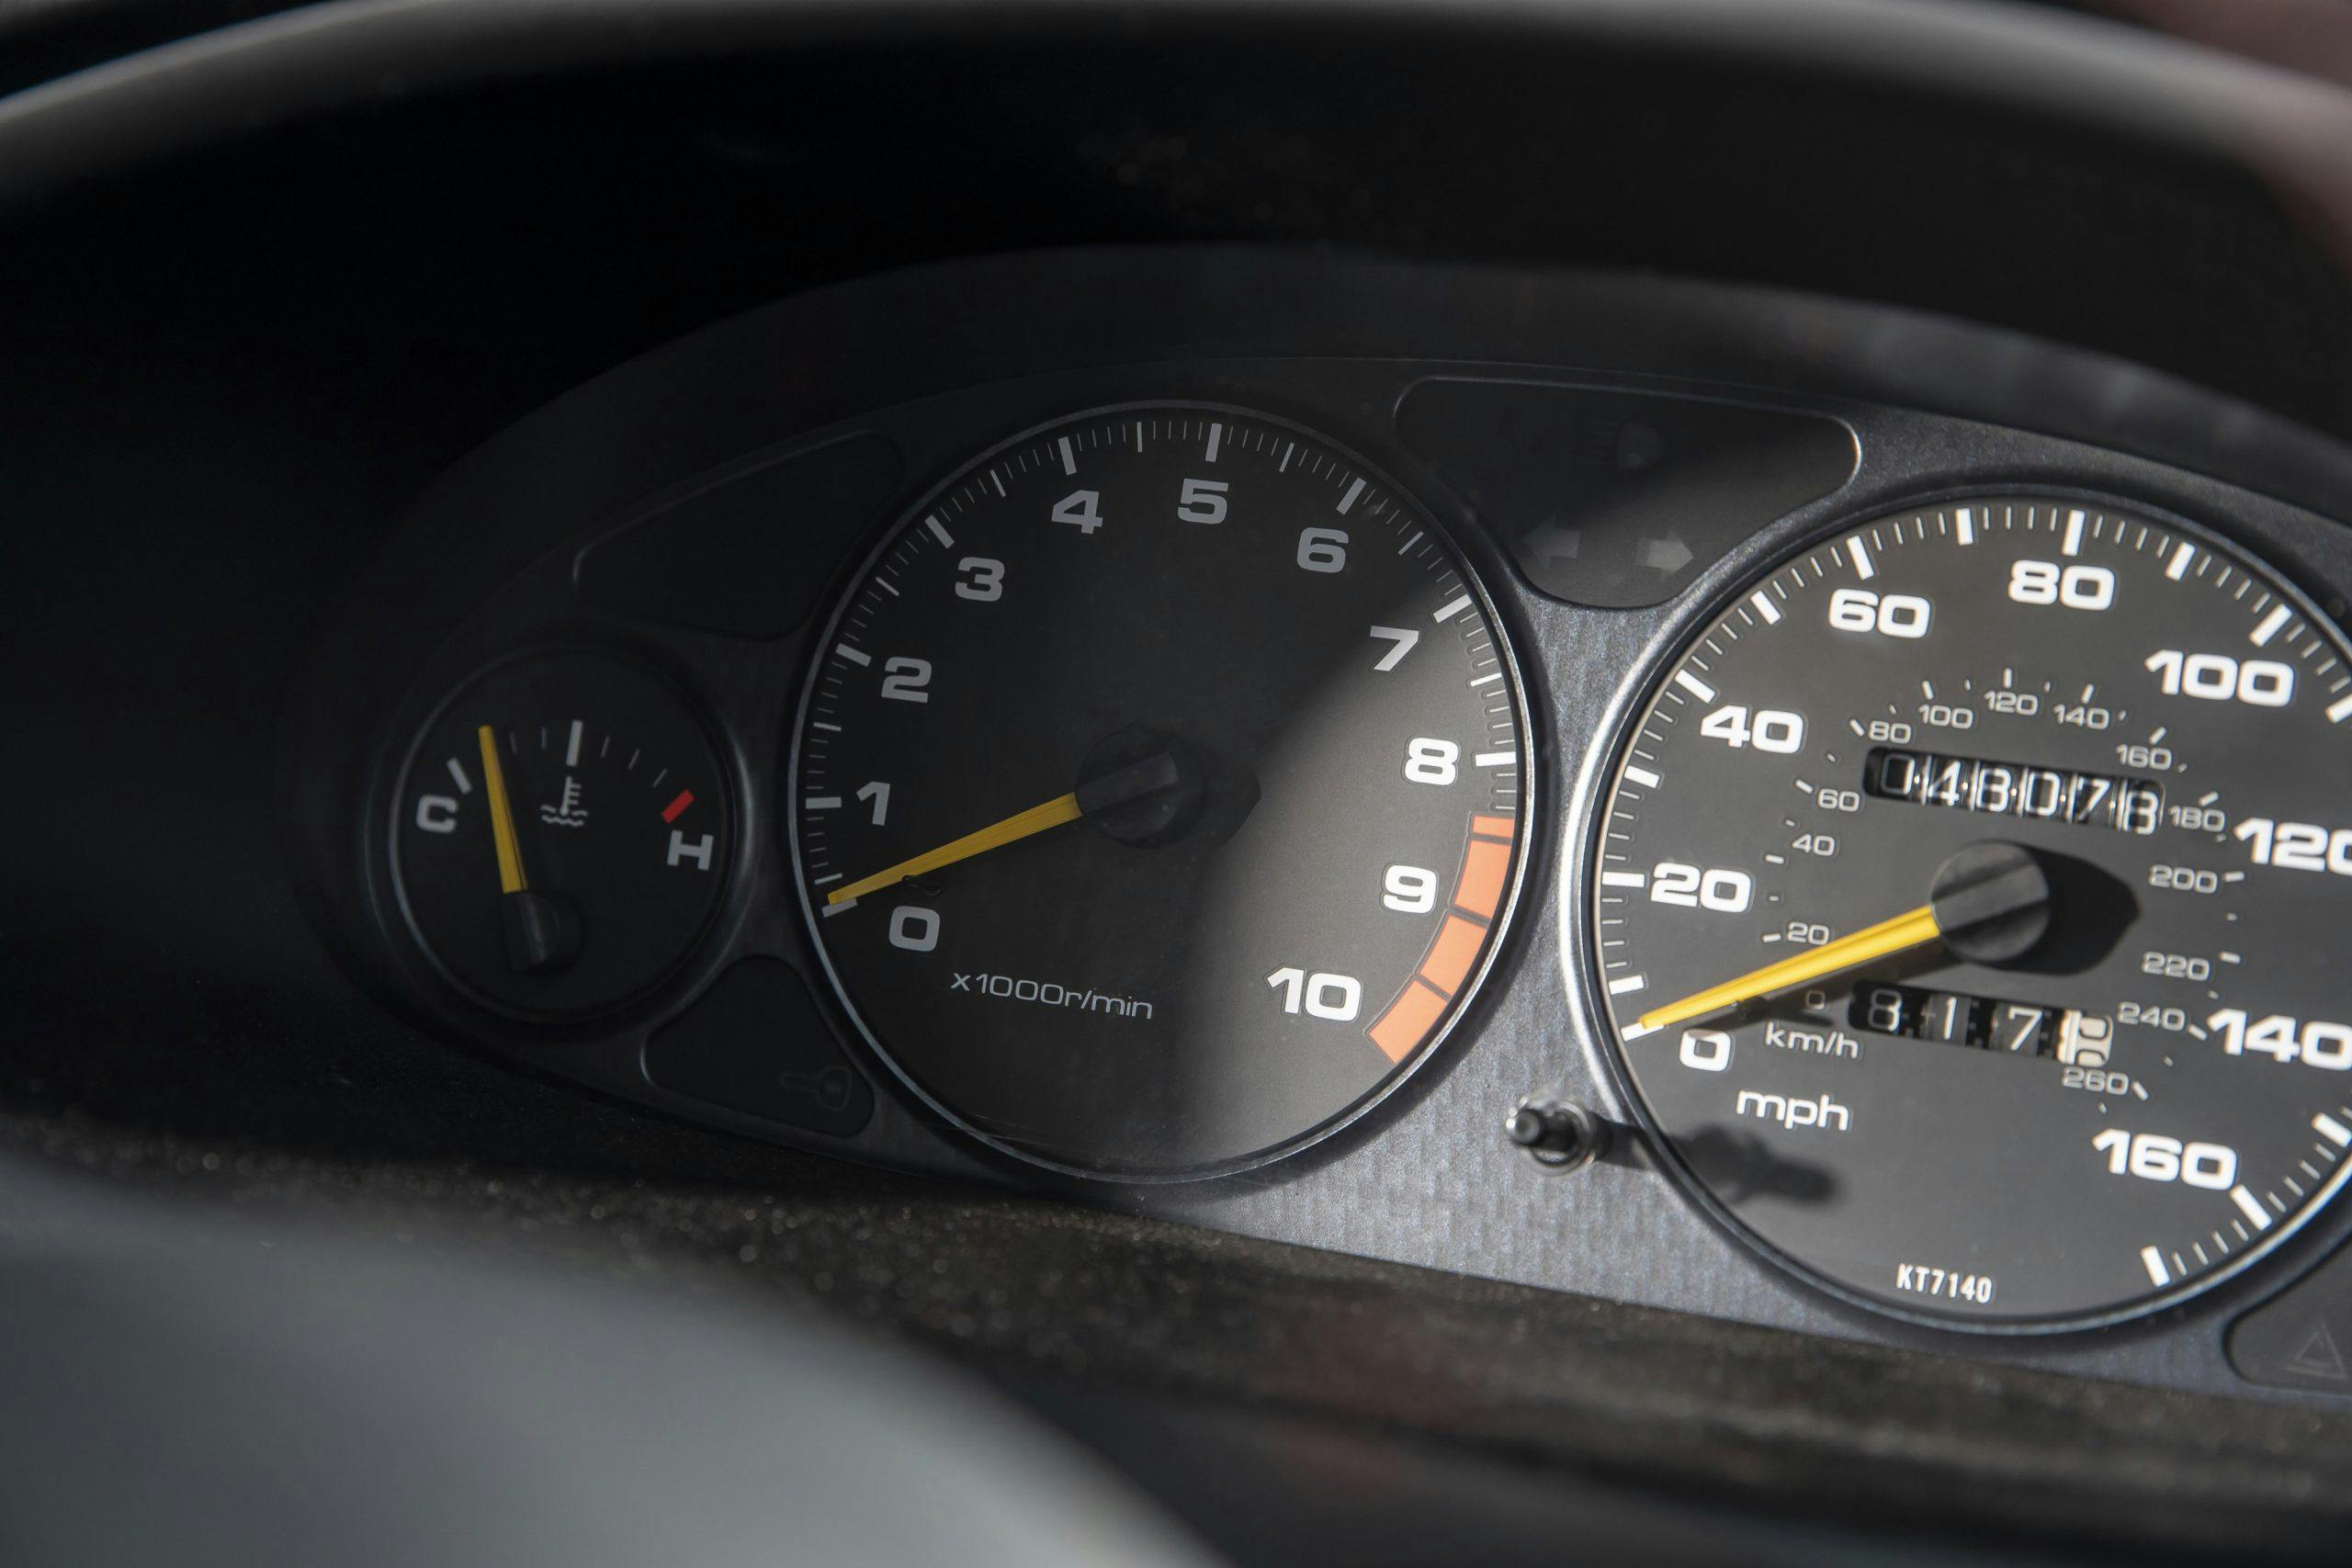 Honda Integra Type-R tach gauge